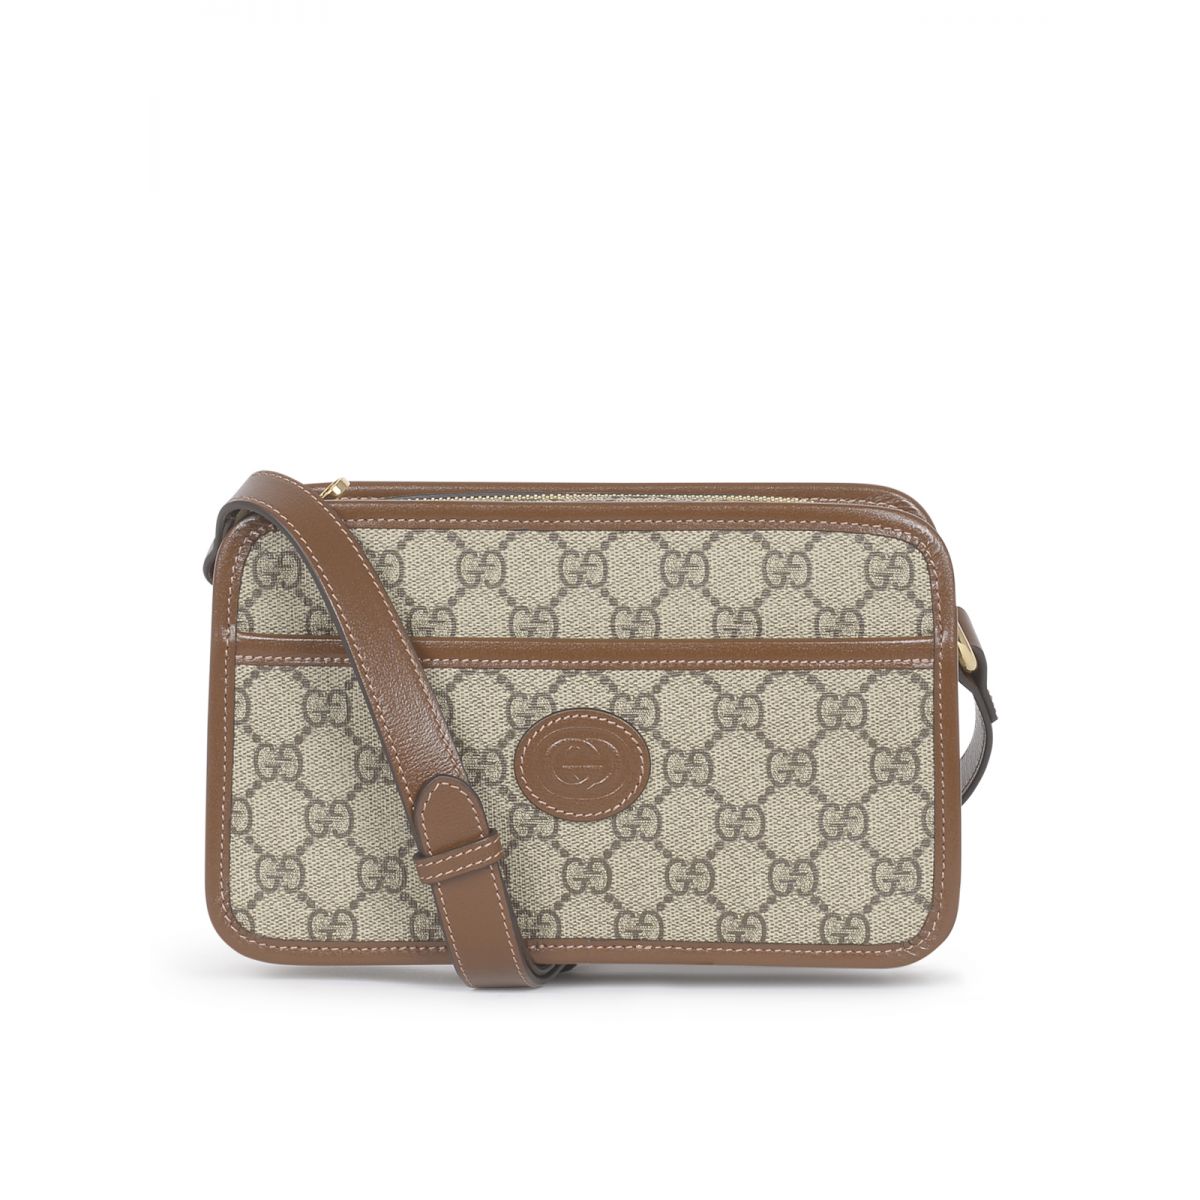 Gucci - Mini bag with GG